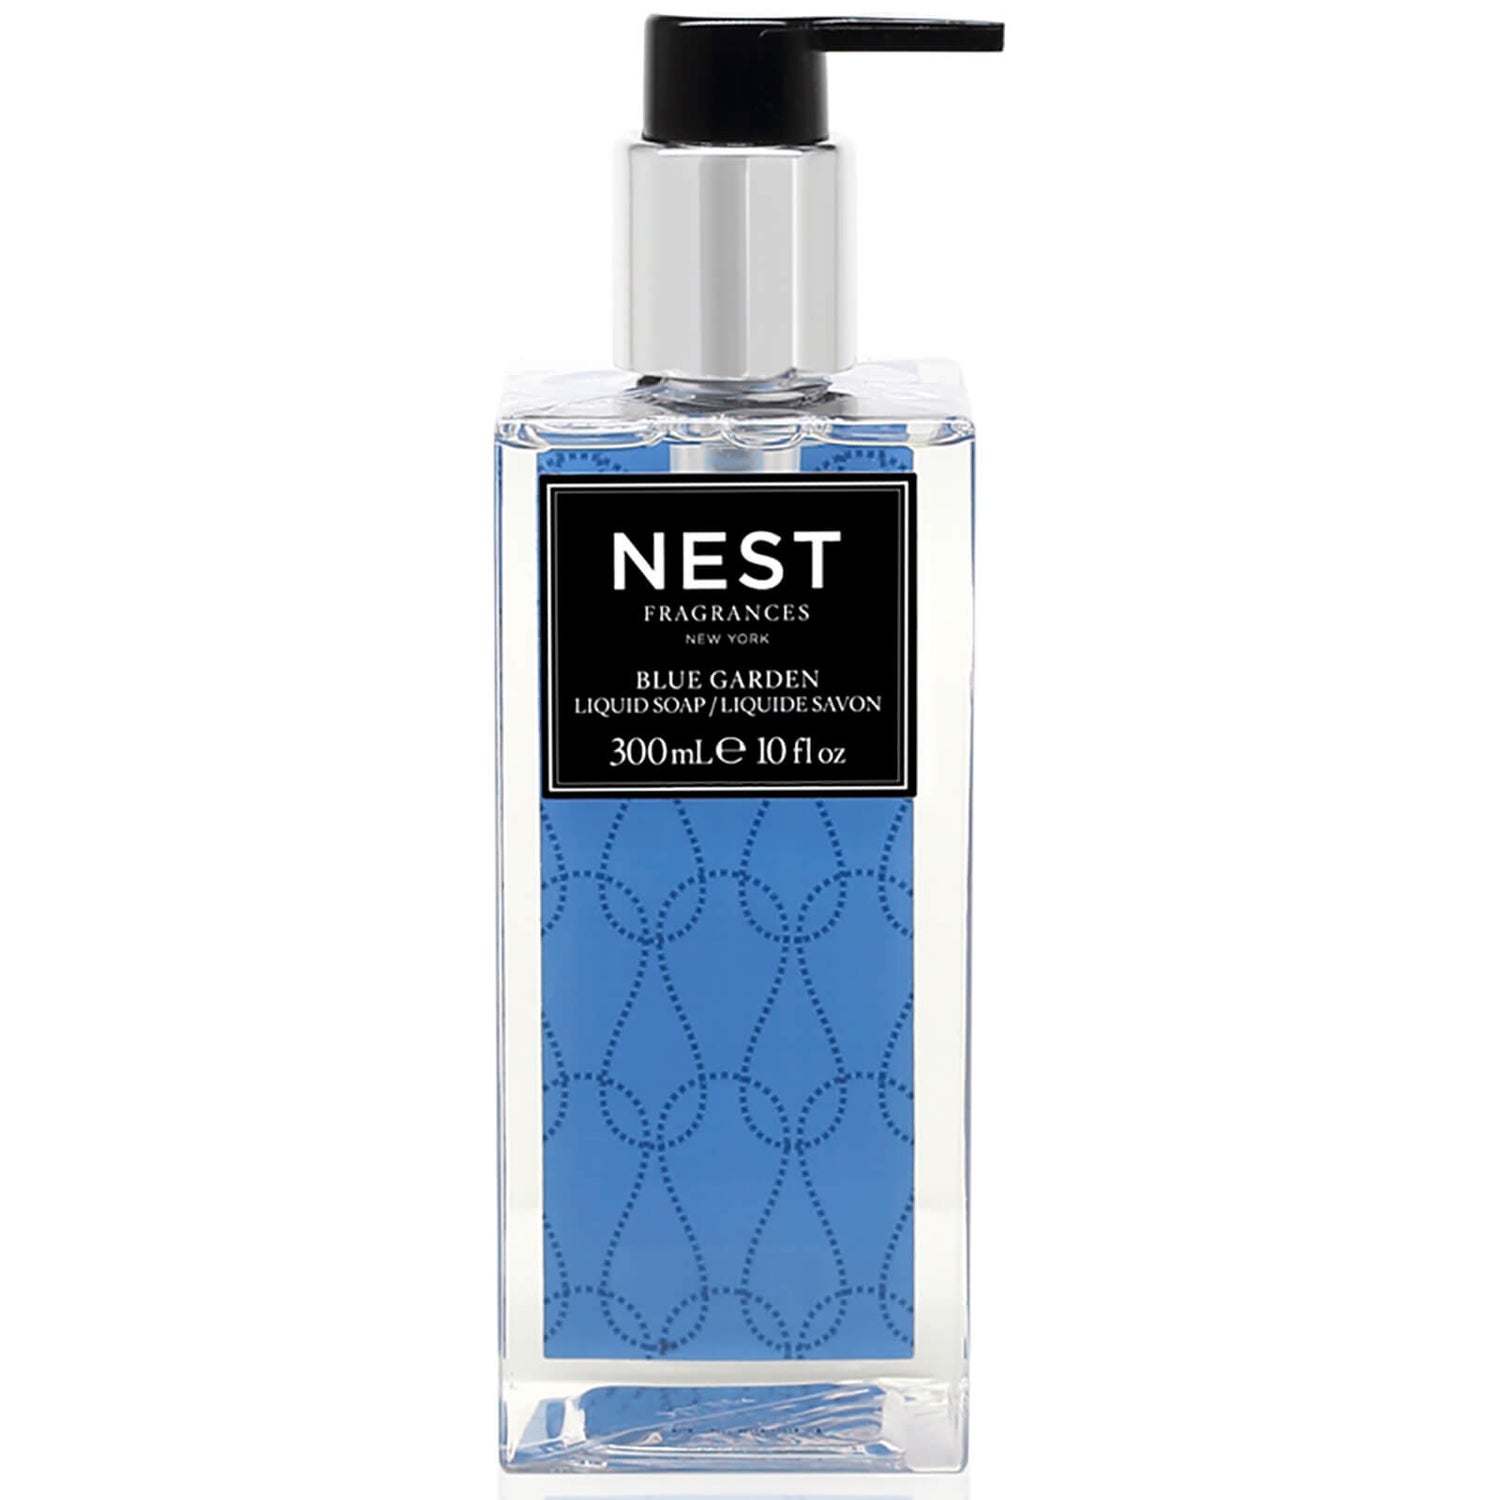 NEST Fragrances Blue Garden Liquid Soap